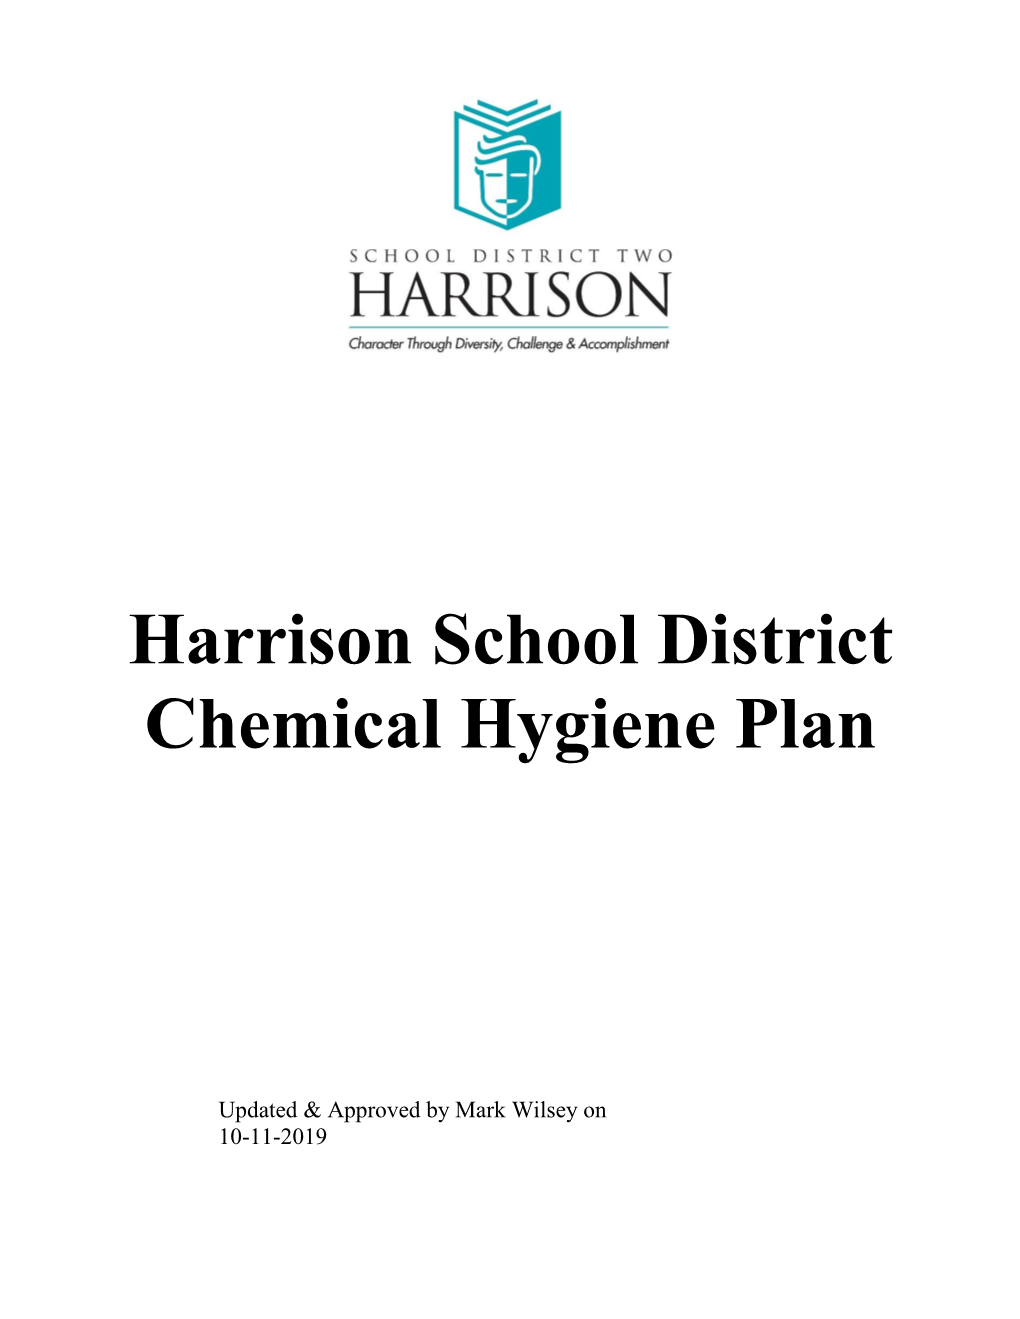 Harrison School District Chemical Hygiene Plan